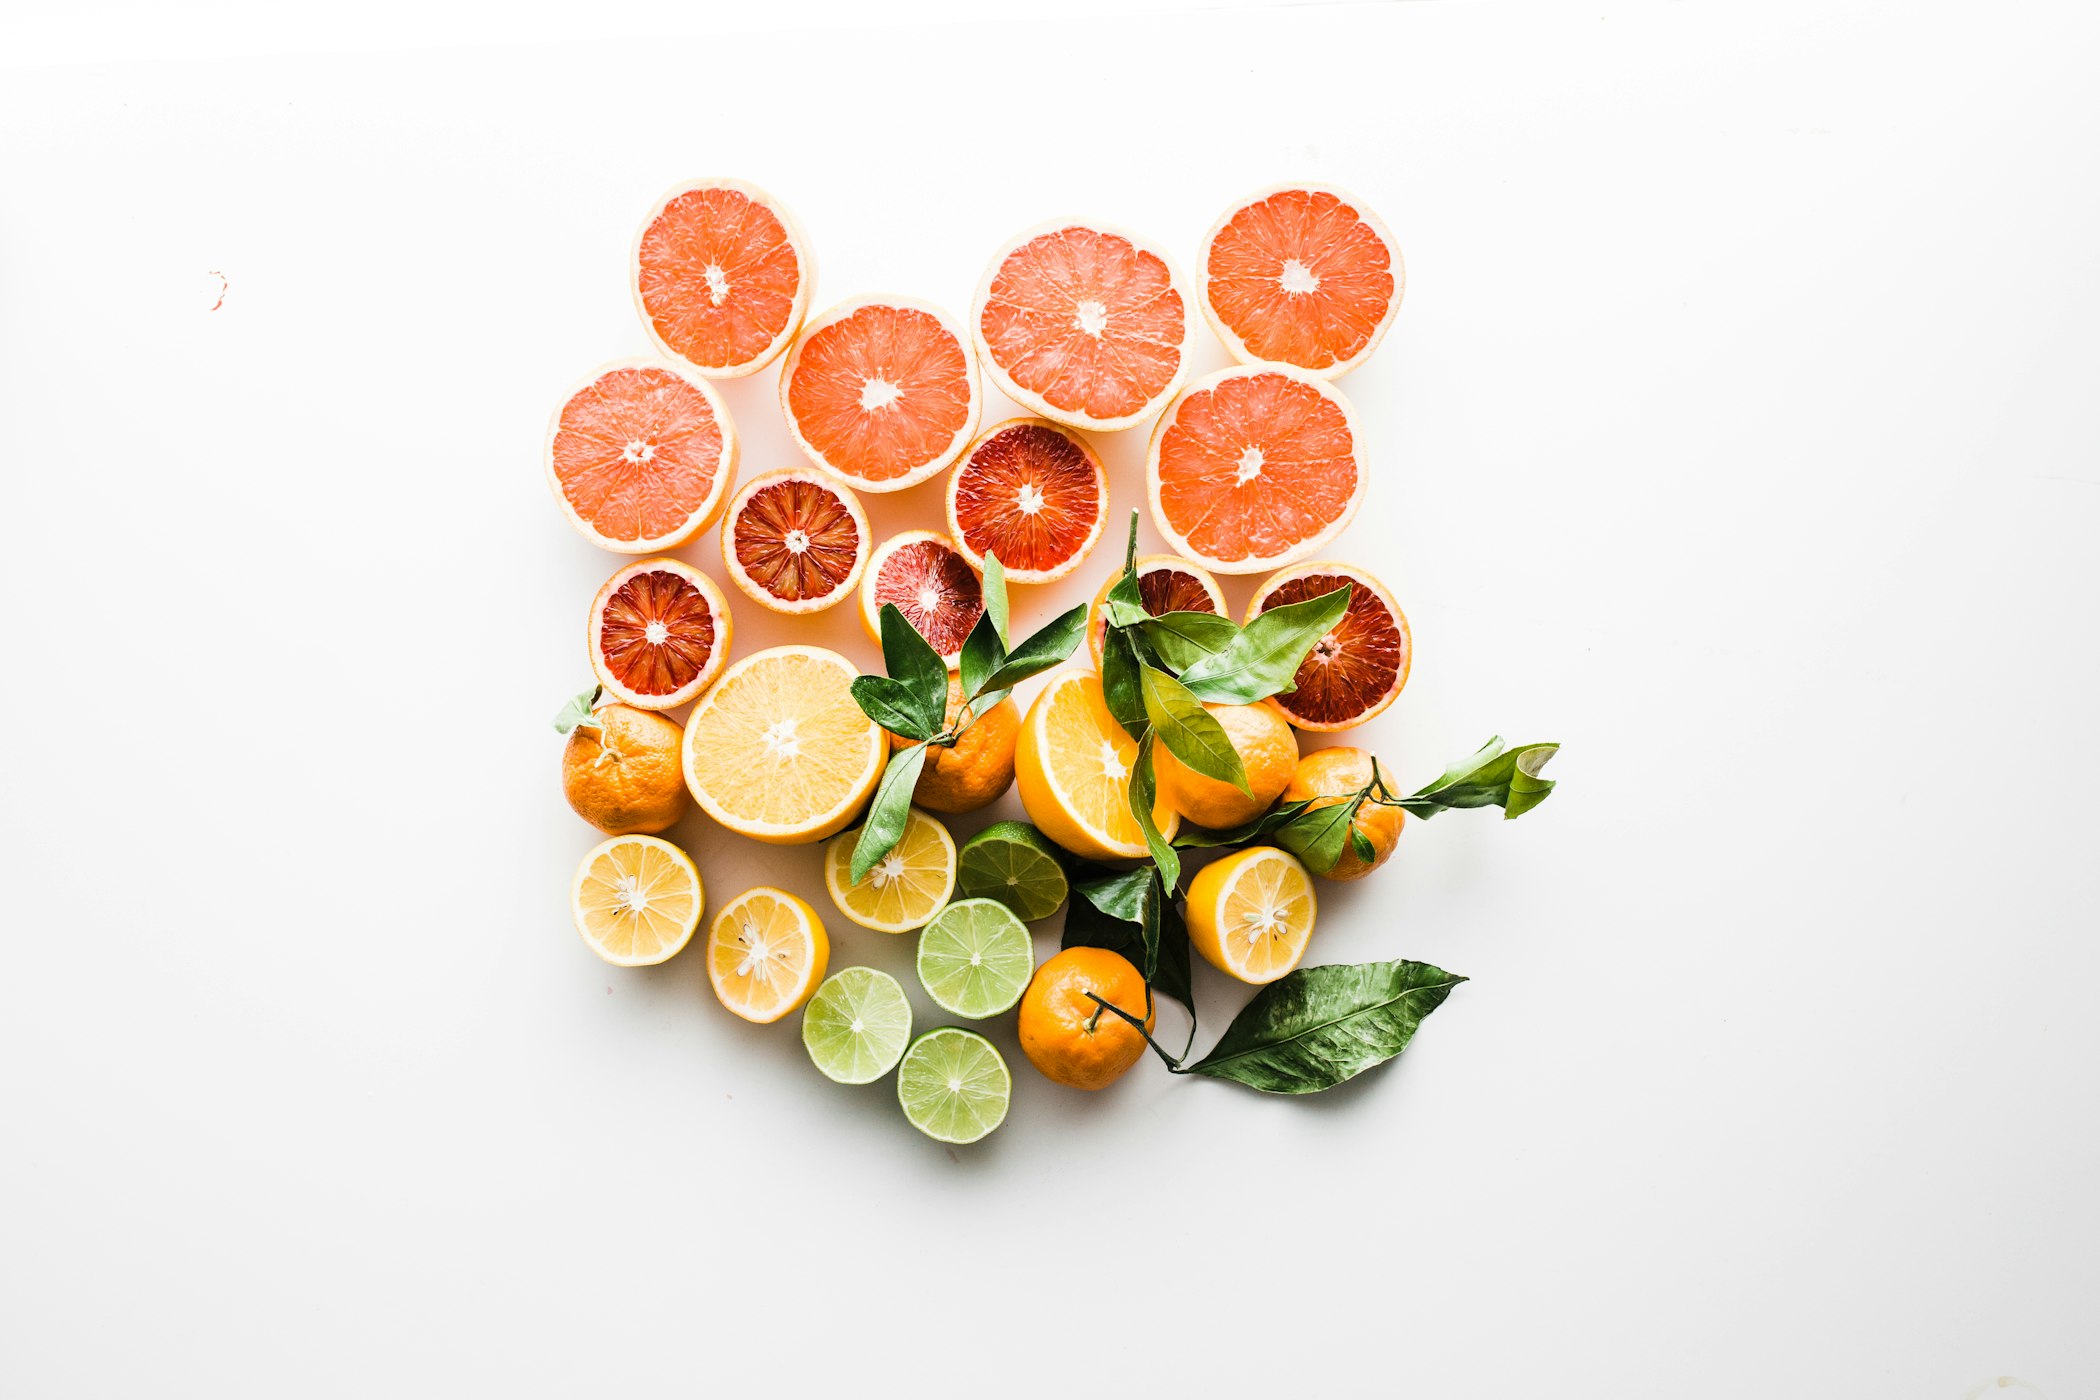 citrus fruit backdrop with lemons oranges limes grapefruits and blood oranges